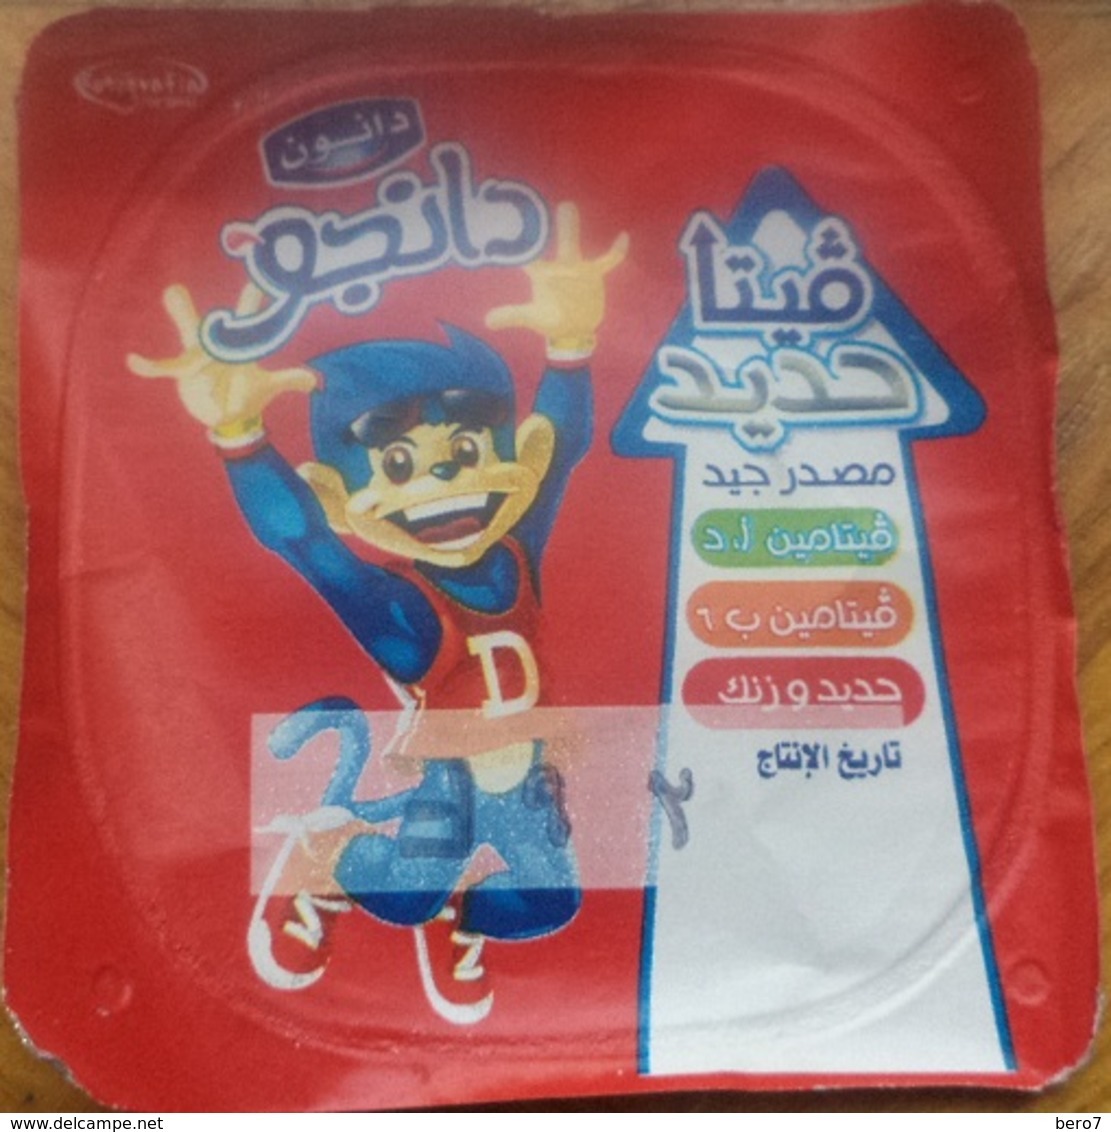 Egypt - Couvercle De Yoghurt Danone "Dango" Arabic (foil) (Egypte) (Egitto) (Ägypten) (Egipto) (Egypten) Africa - Milchdeckel - Kaffeerahmdeckel